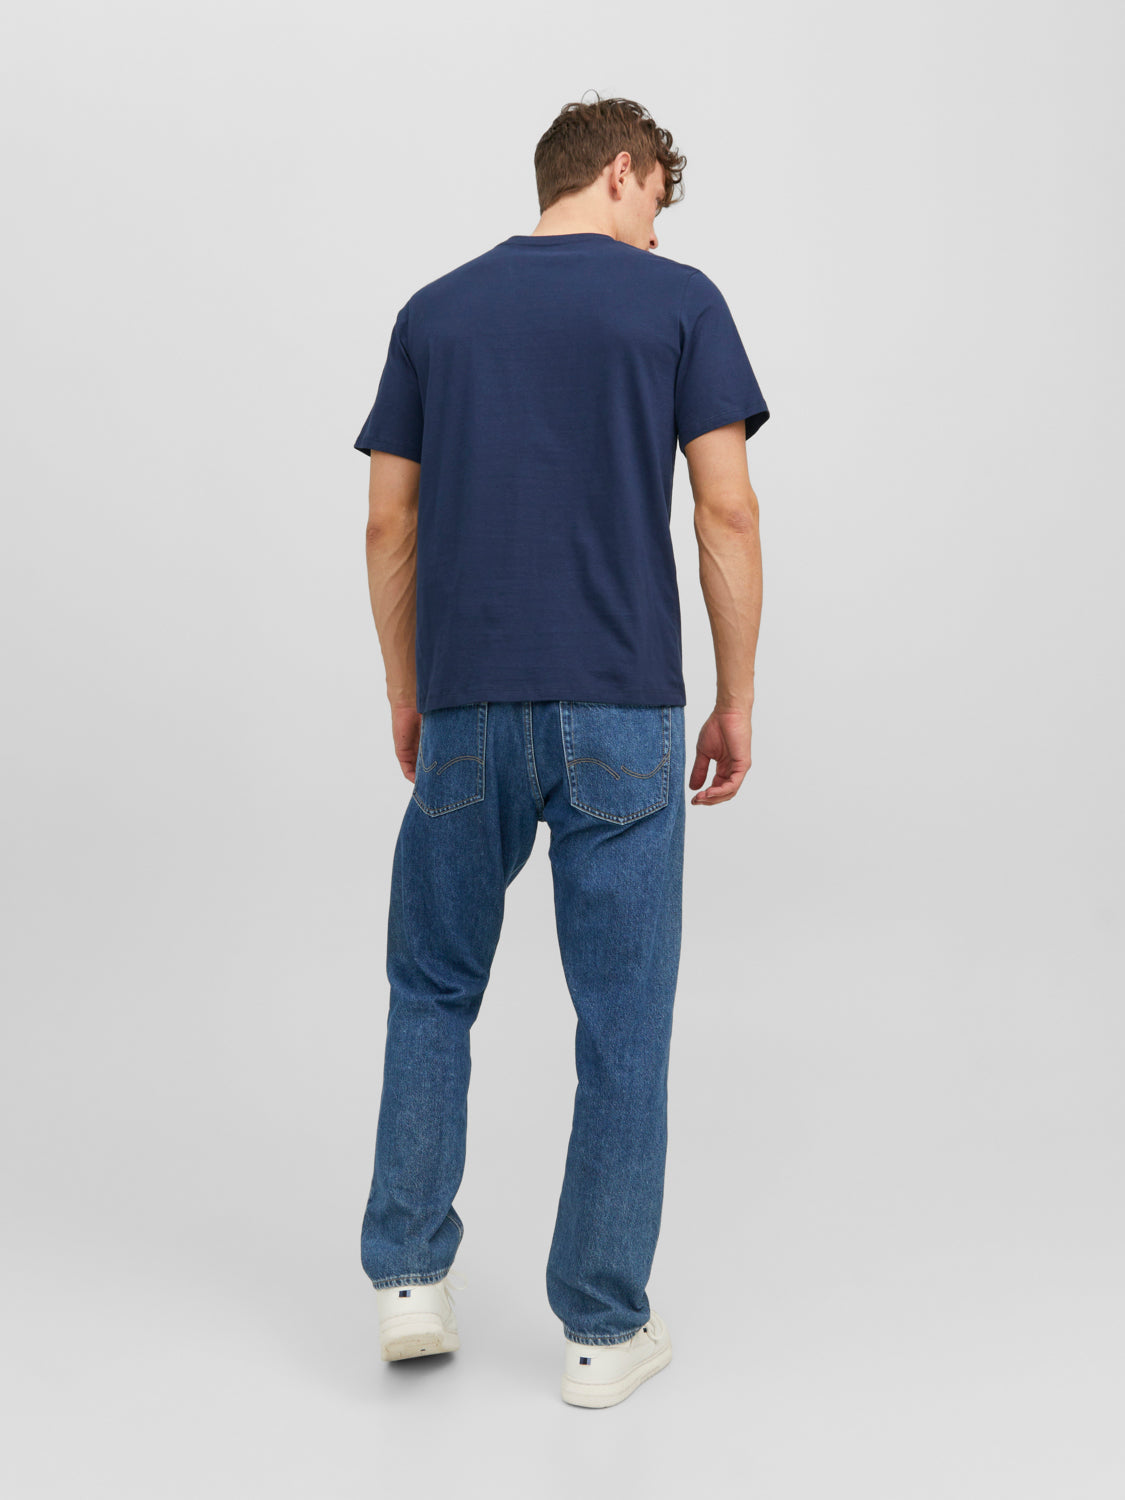 Camiseta de manga corta- JORAFTERLIFE Azul marino